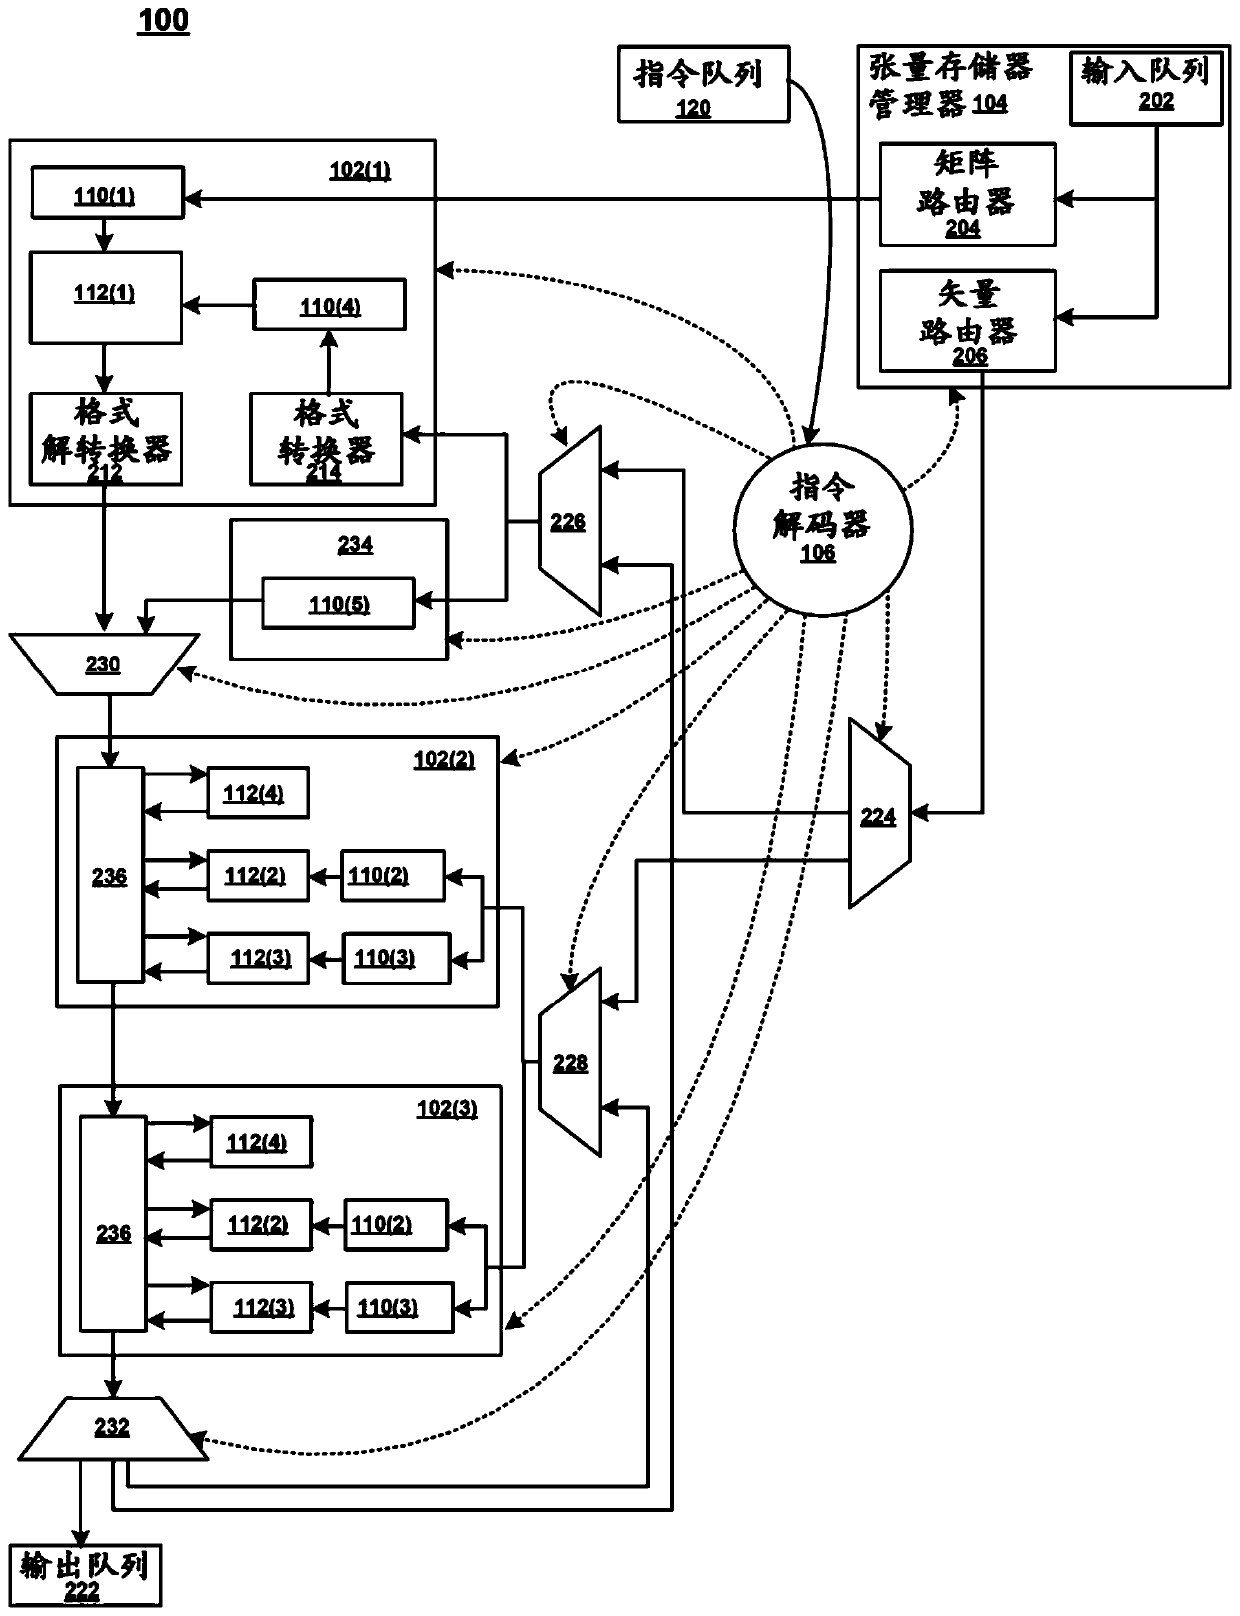 Tensor processor instruction set architecture